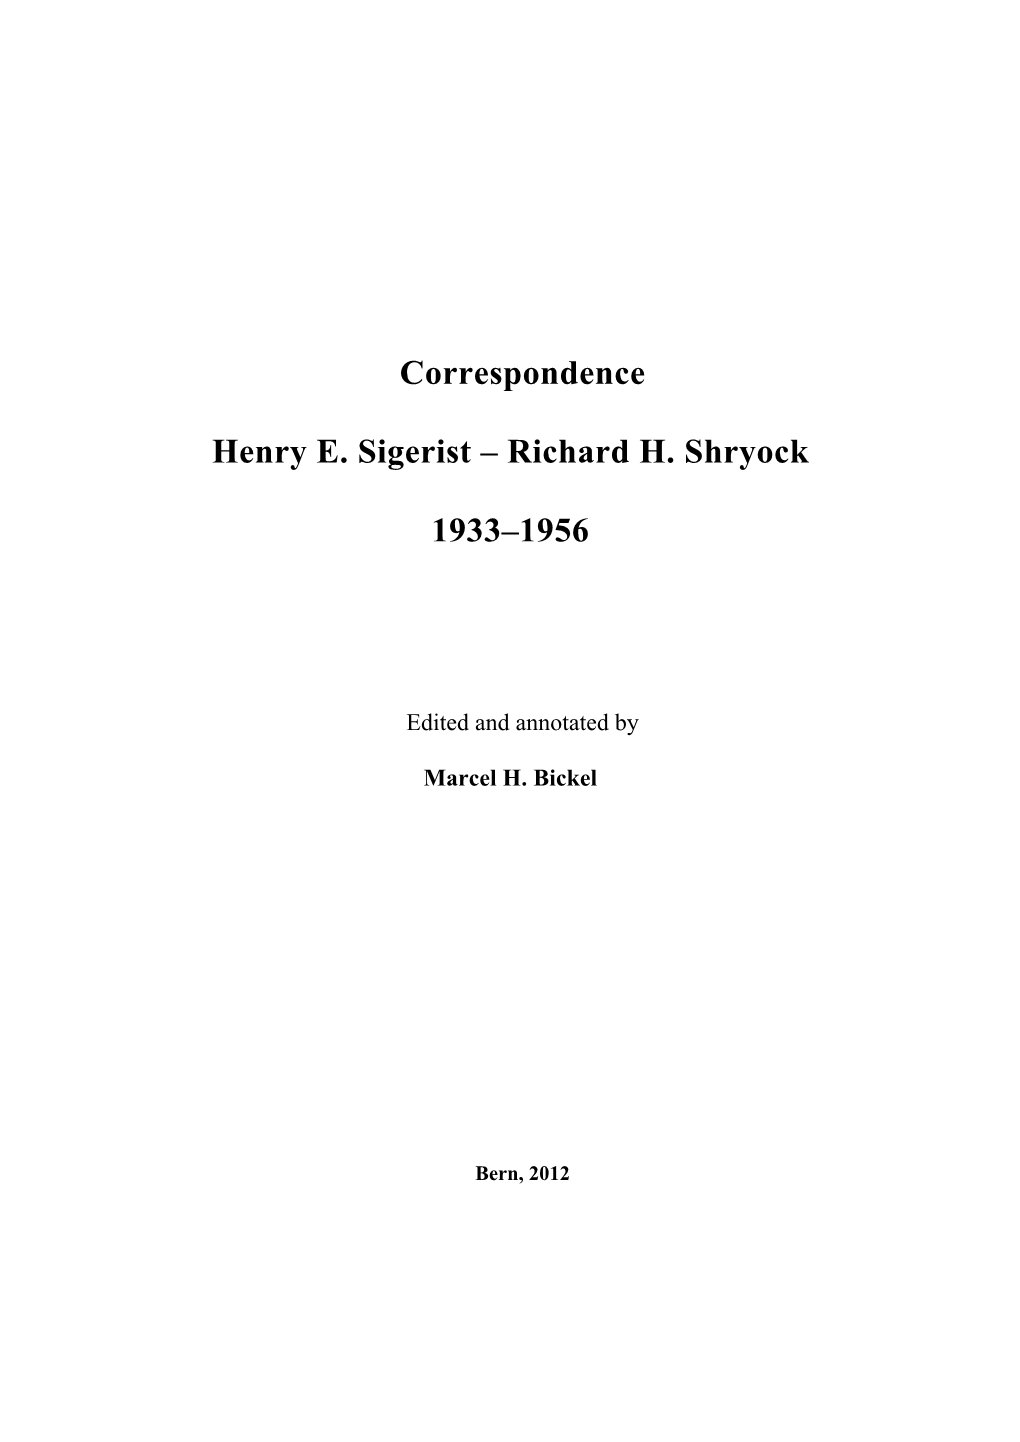 Correspondence Henry E. Sigerist